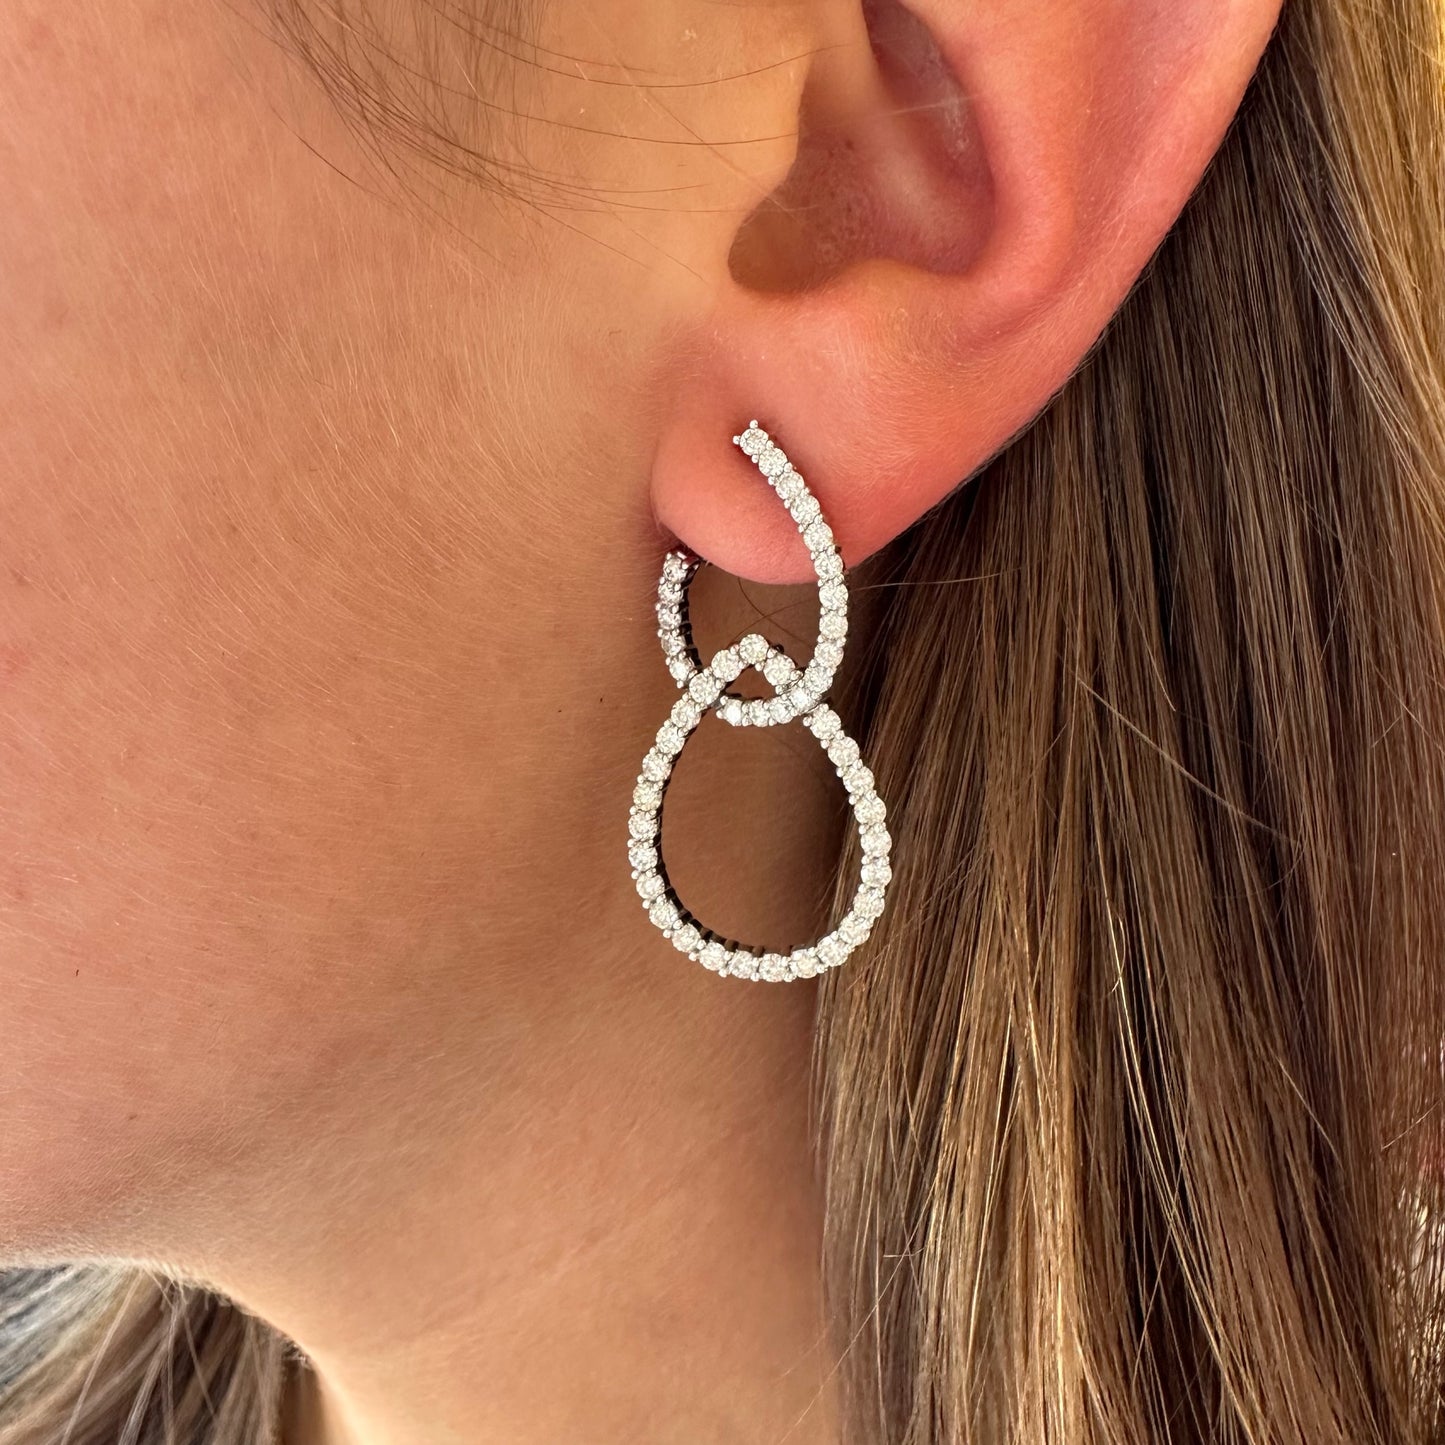 Large Double Diamond Oval Earrings